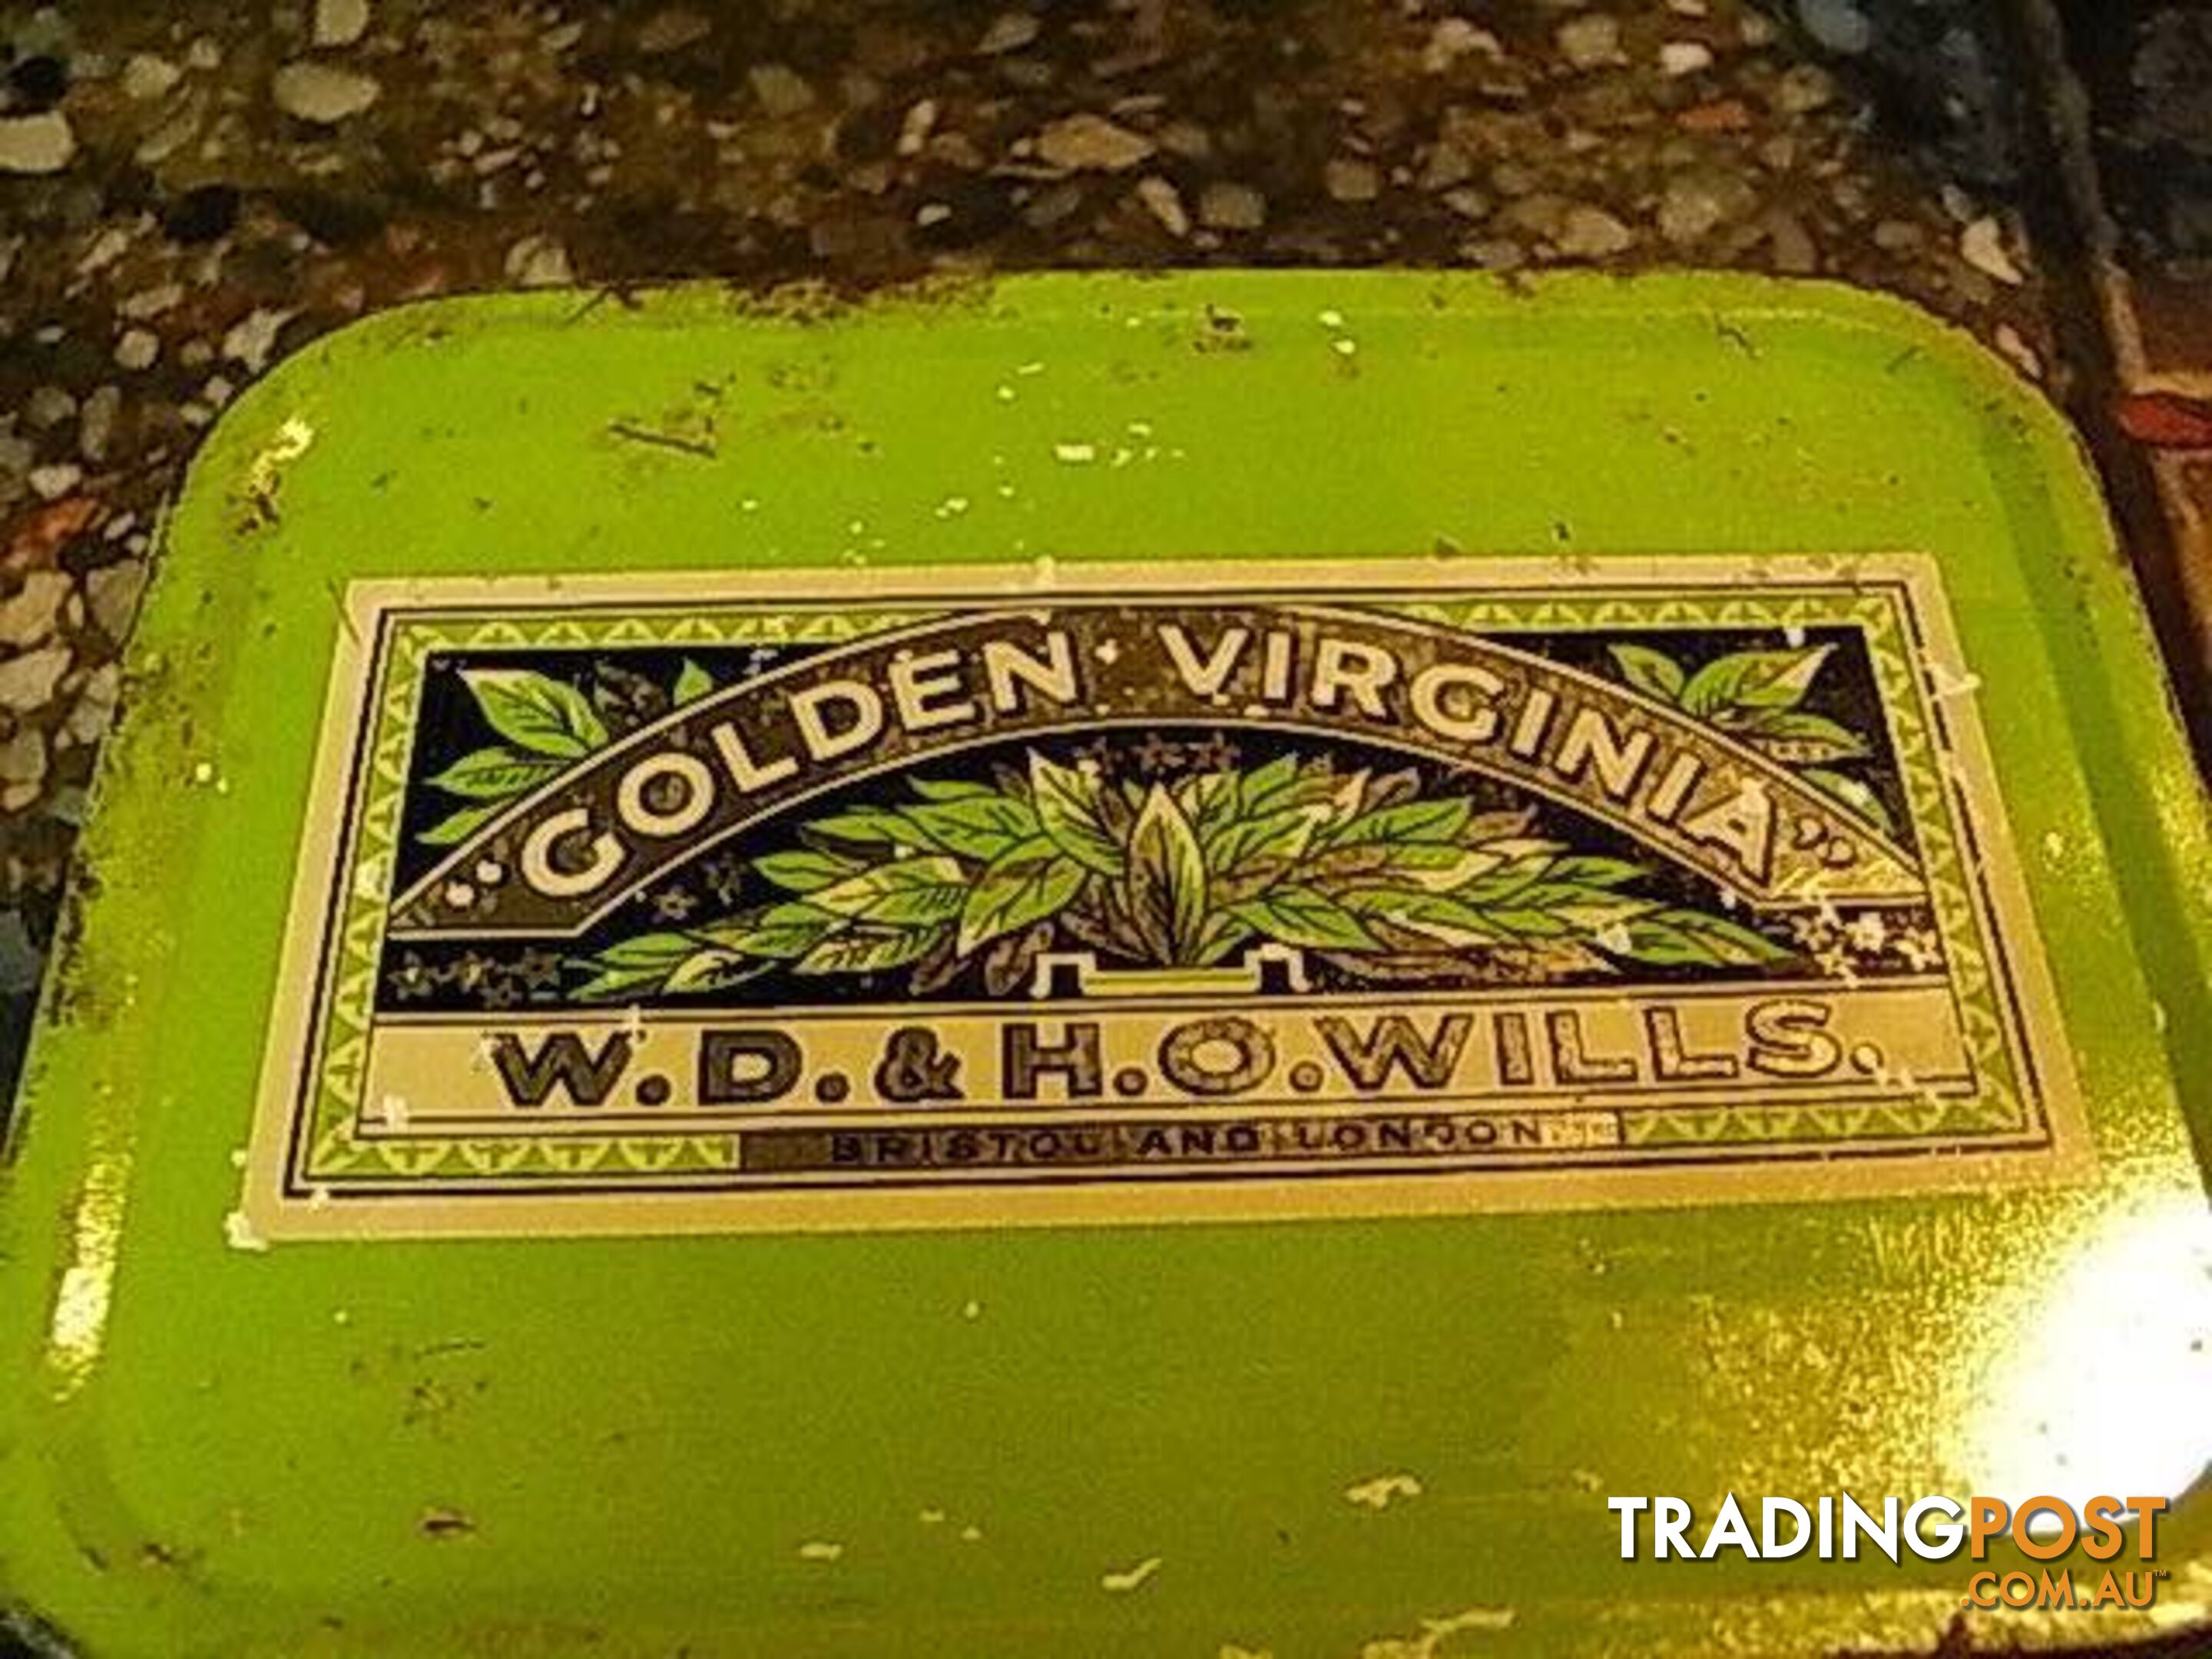 TWO VINTAGE W.D.& H.O.WILLS.GOLDEN VIRGINIA TINS PICKUP CLAYTON